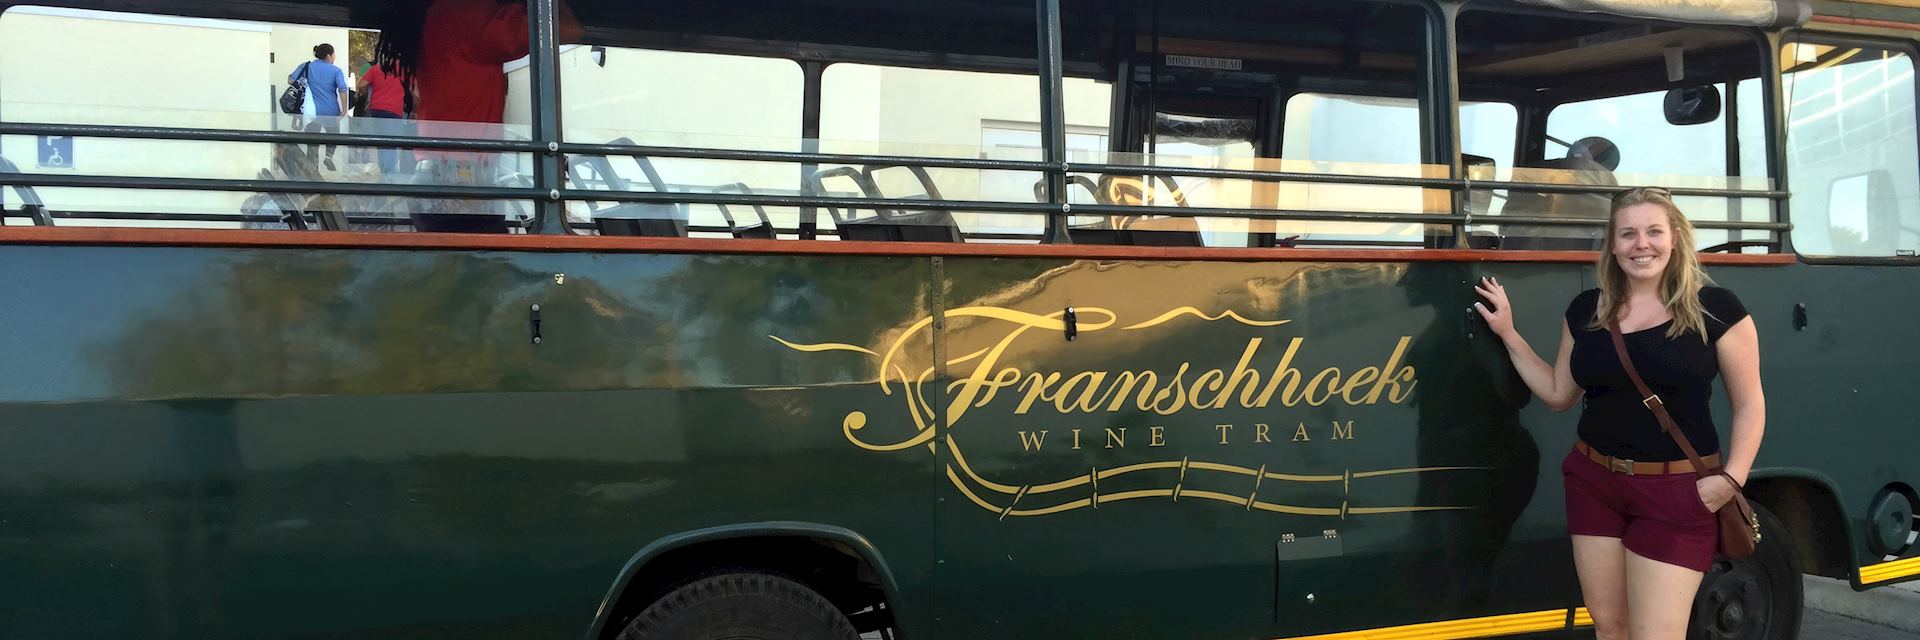 Sophie enjoying the Franschhoek Wine Tram tour, South Africa